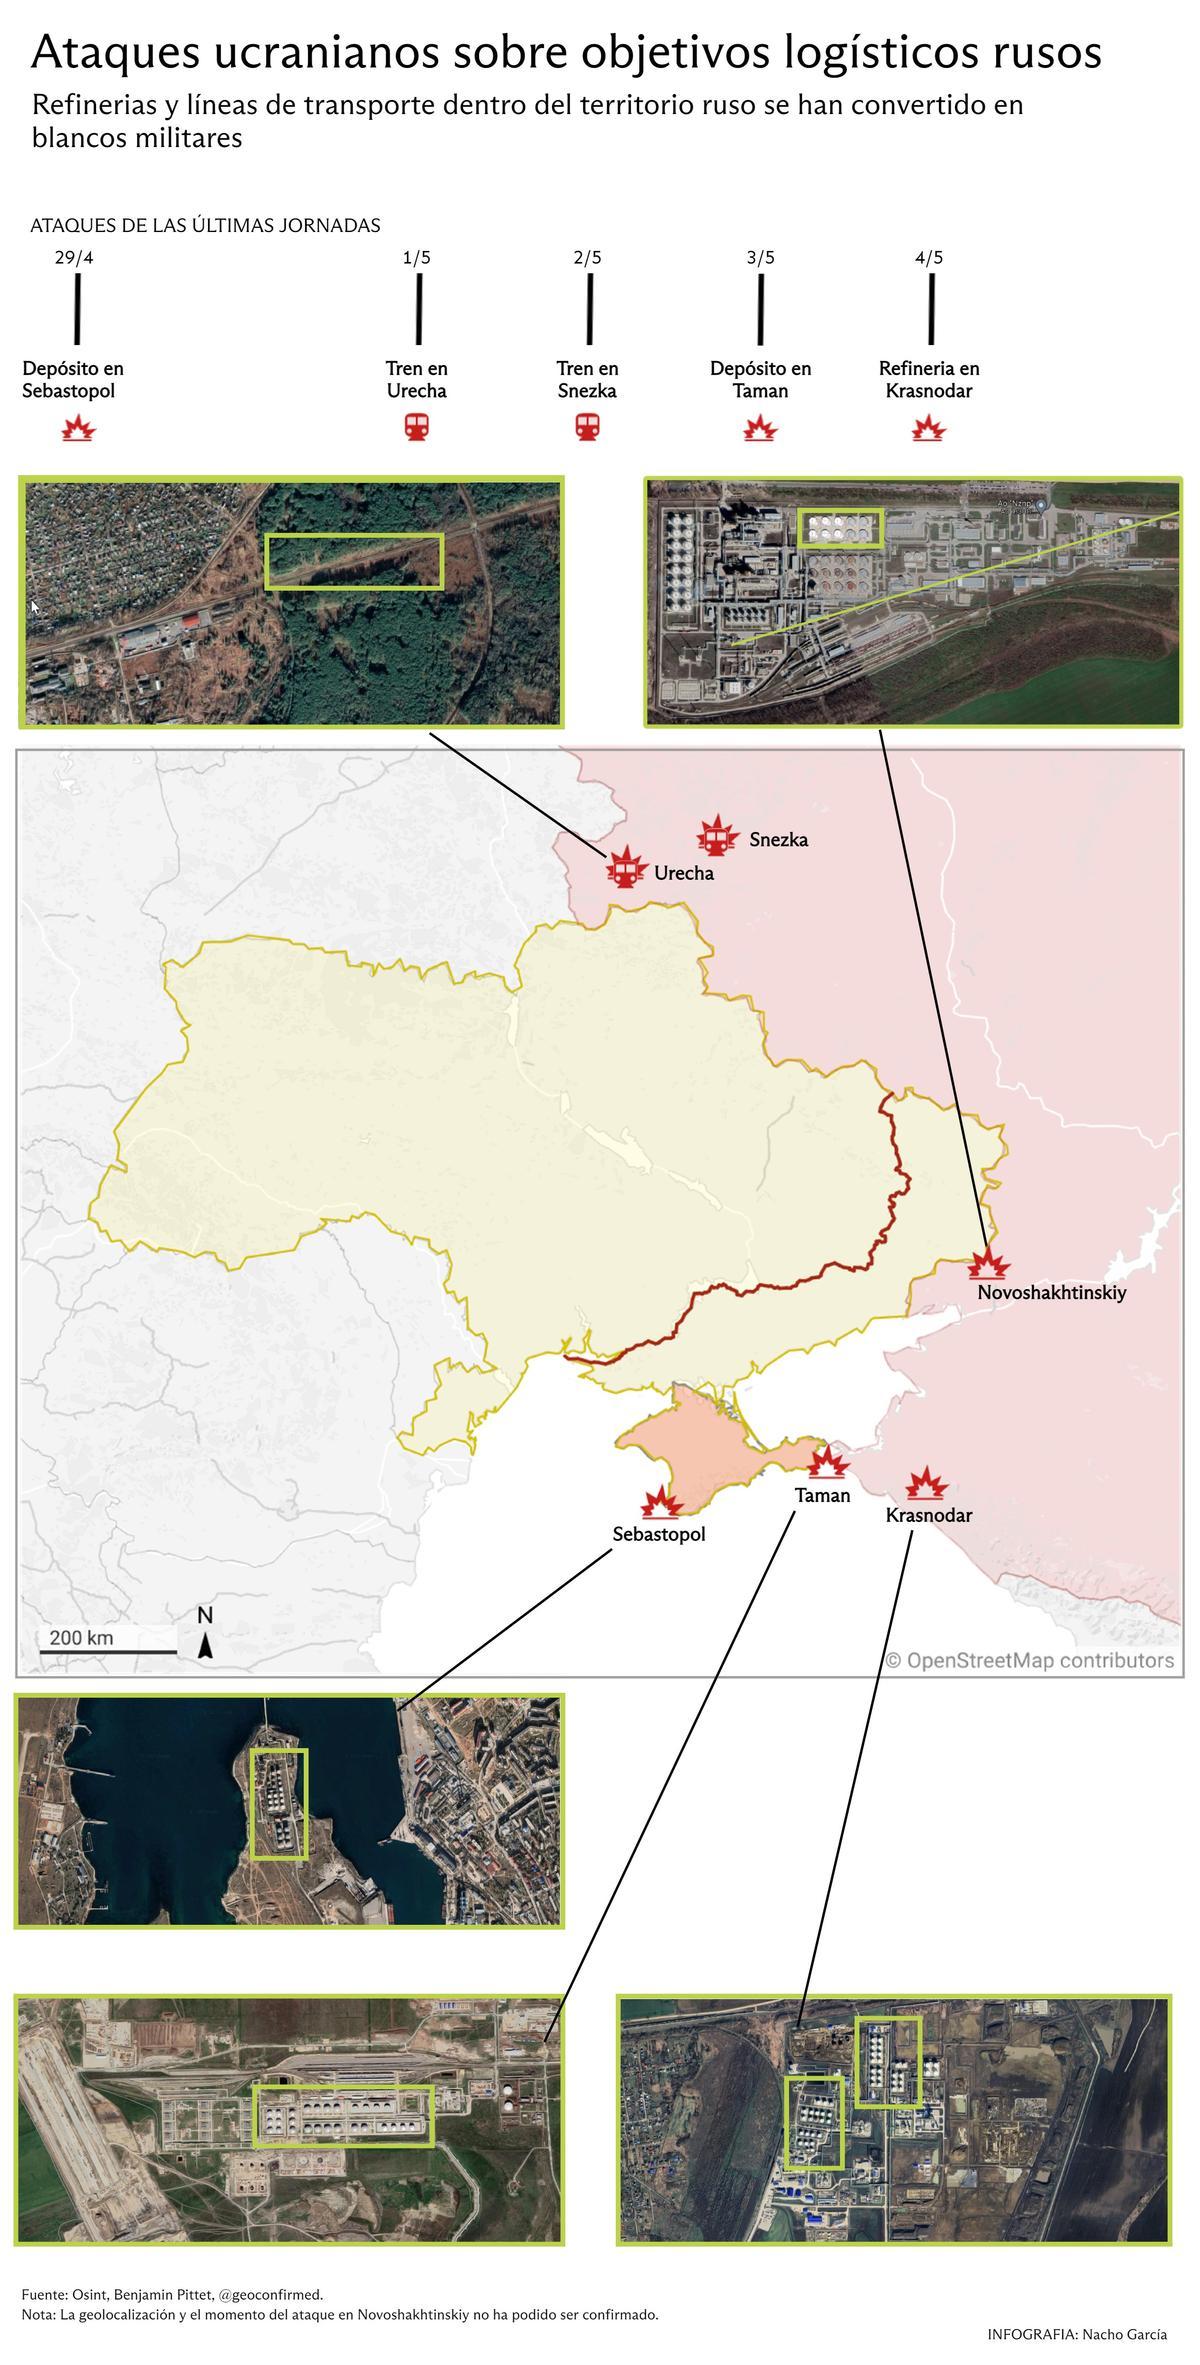 Ataques ucranianos sobre objetivos logísticos rusos.